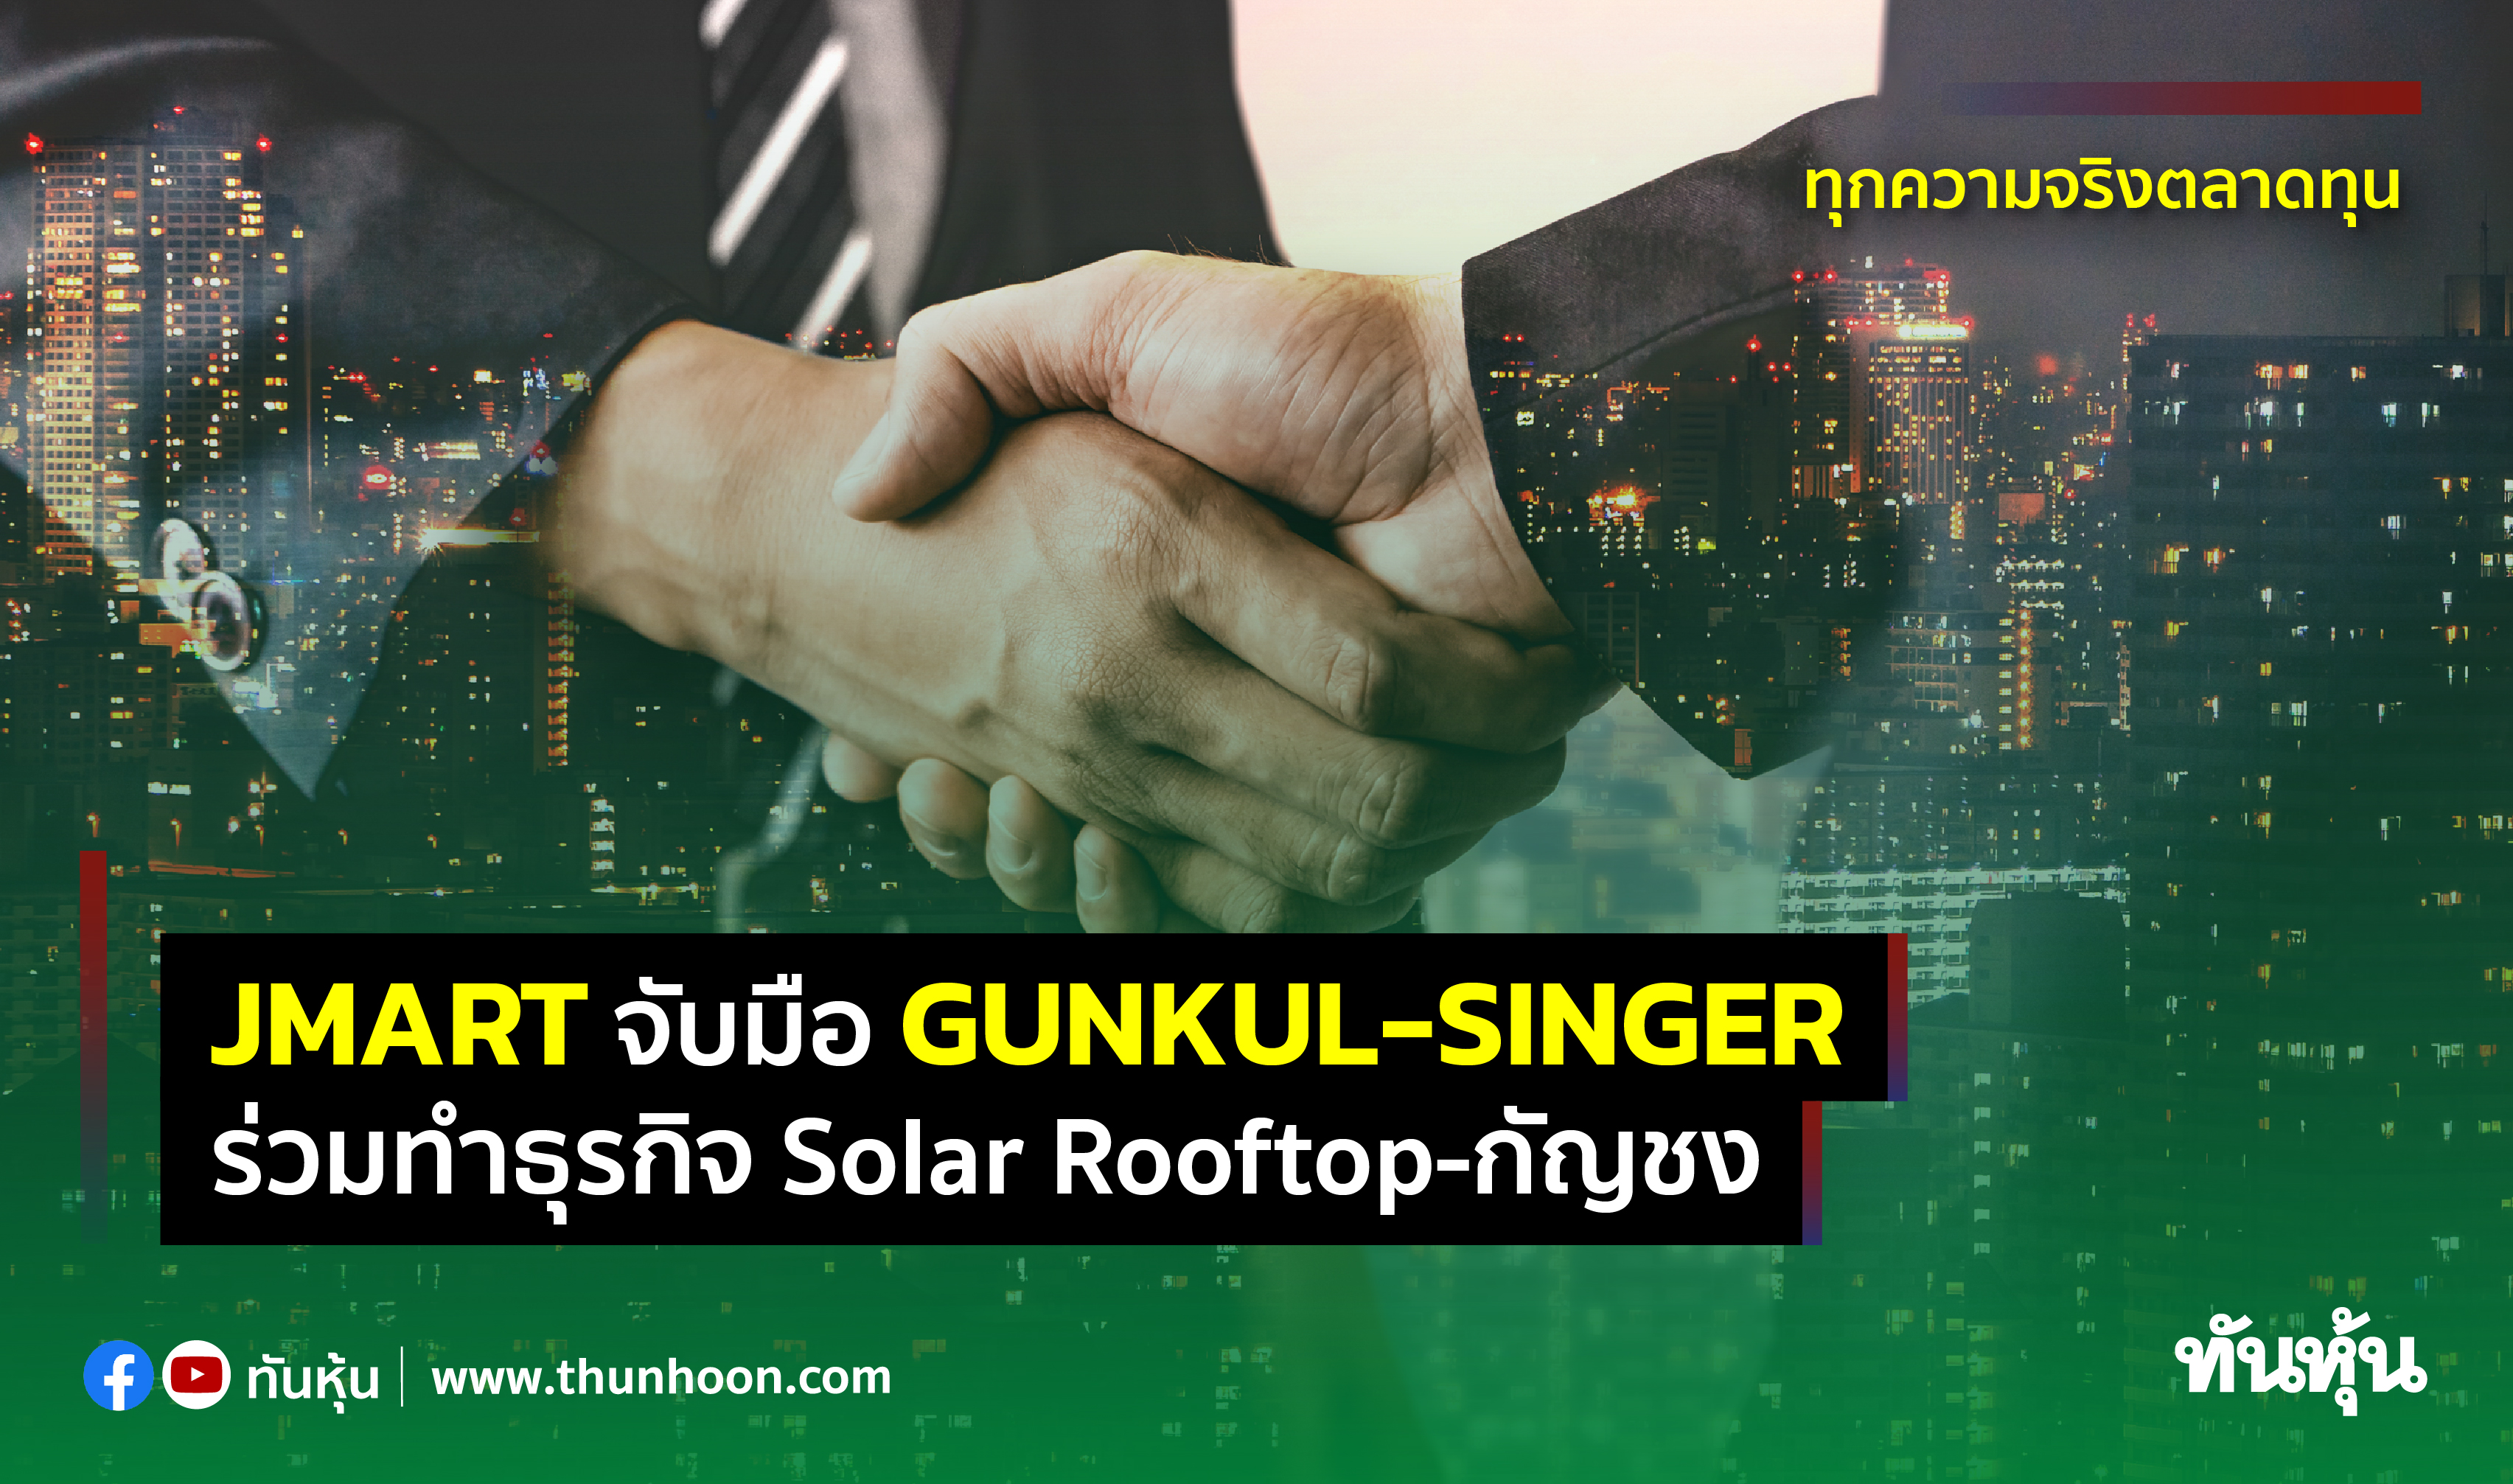 JMART จับมือ GUNKUL-SINGER ร่วมทำธุรกิจ Solar Rooftop-กัญชง